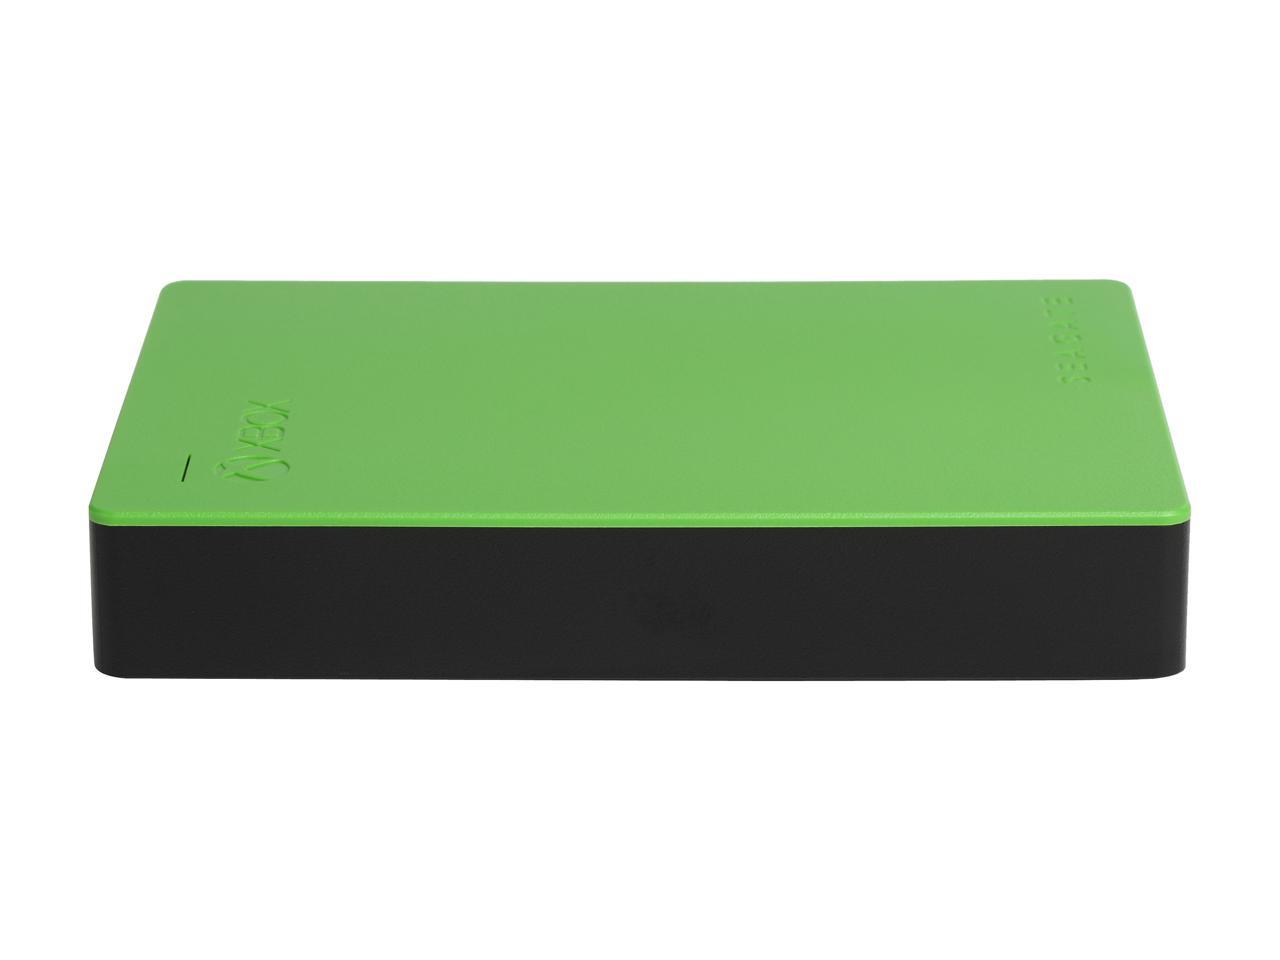 Seagate 4Tb Game Drive For Xbox One Portable Usb 3.0 Model Stea4000402 - Green